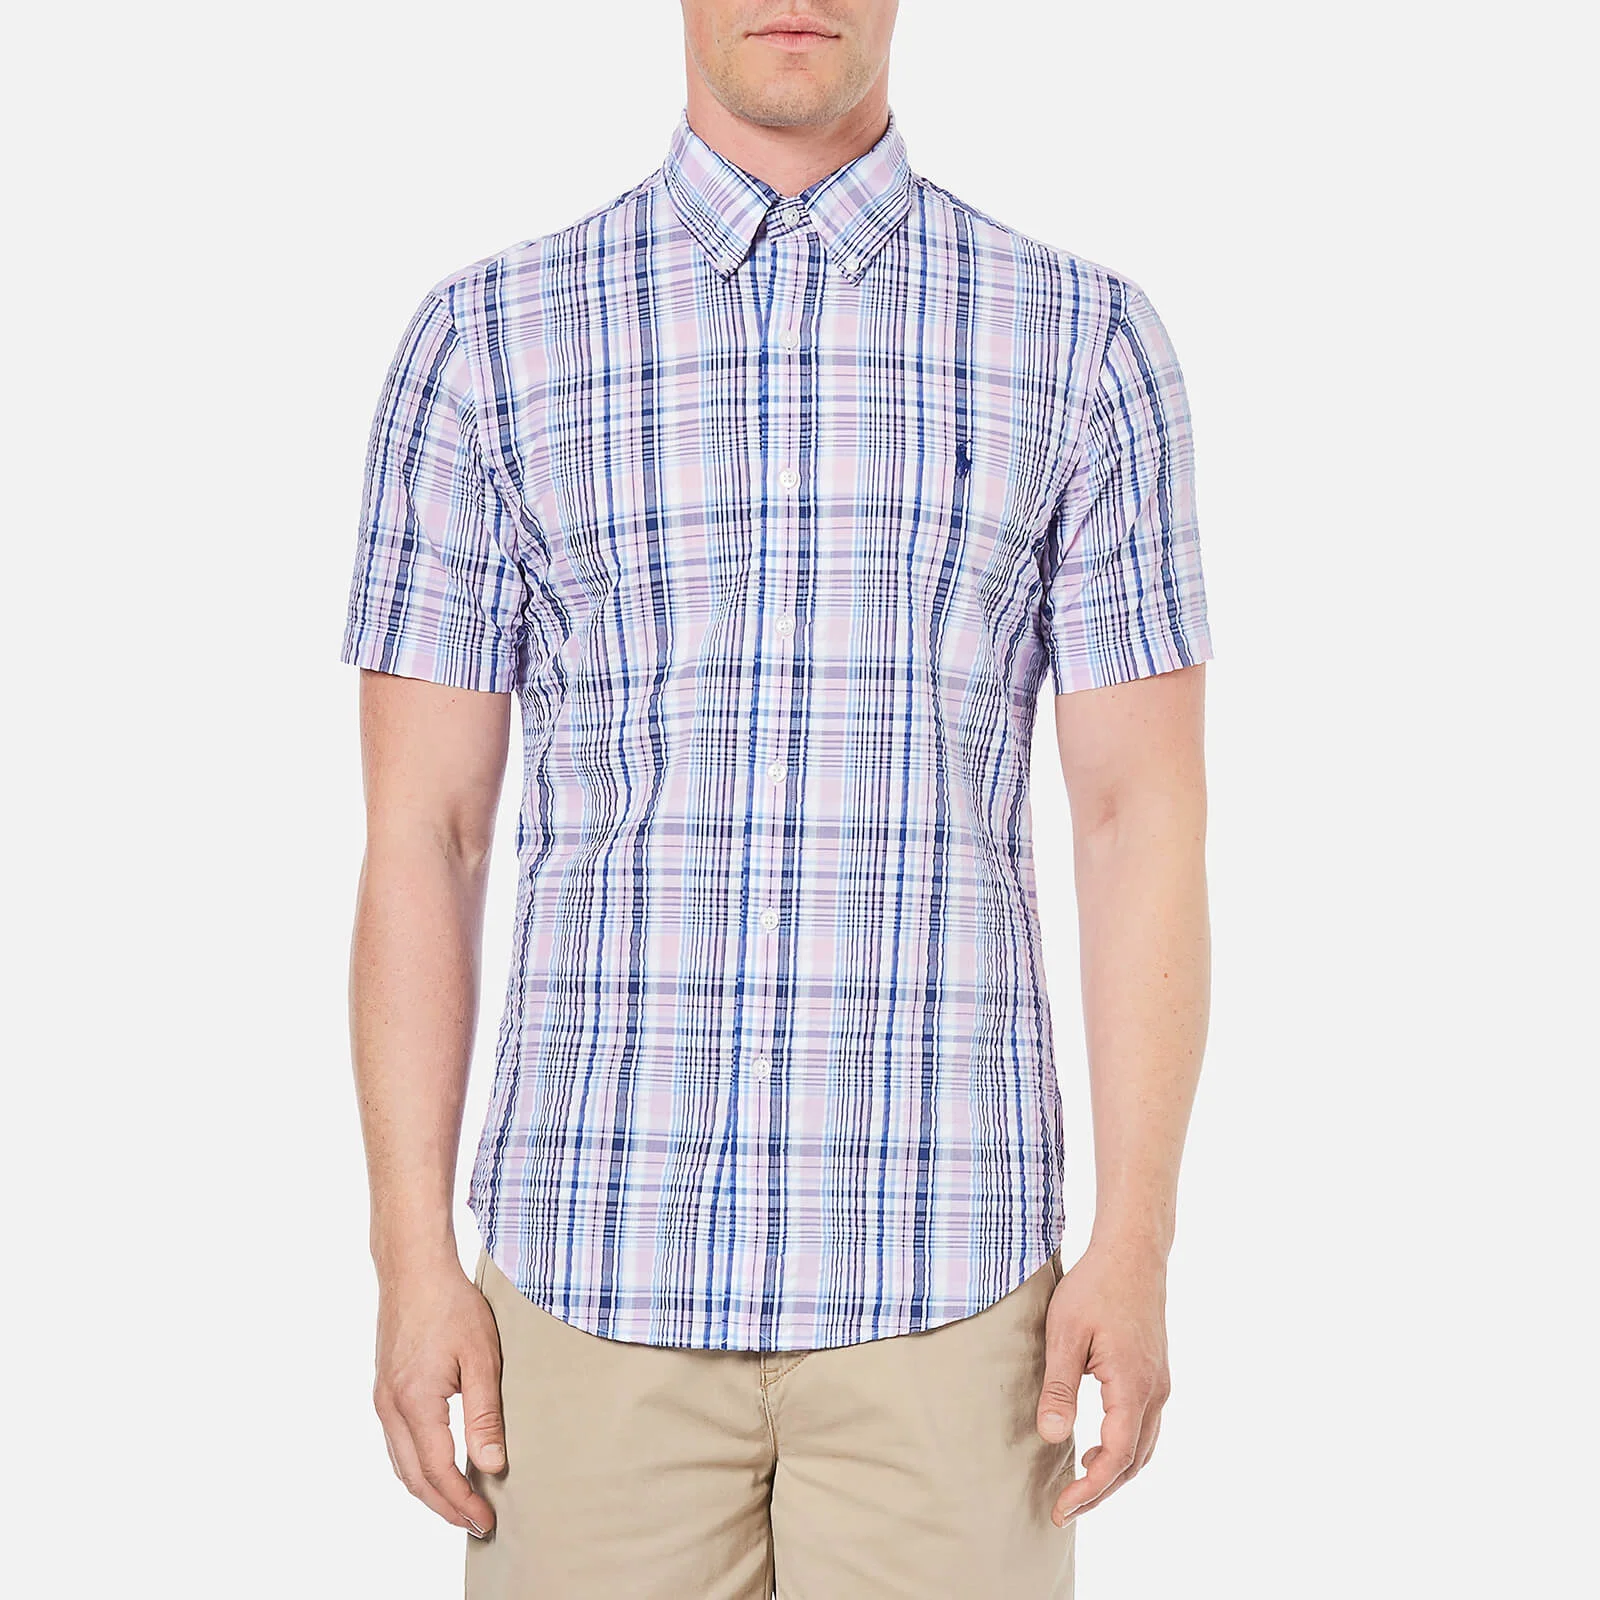 Polo Ralph Lauren Men's Checked Short Sleeve Shirt - Pink/Blue Image 1